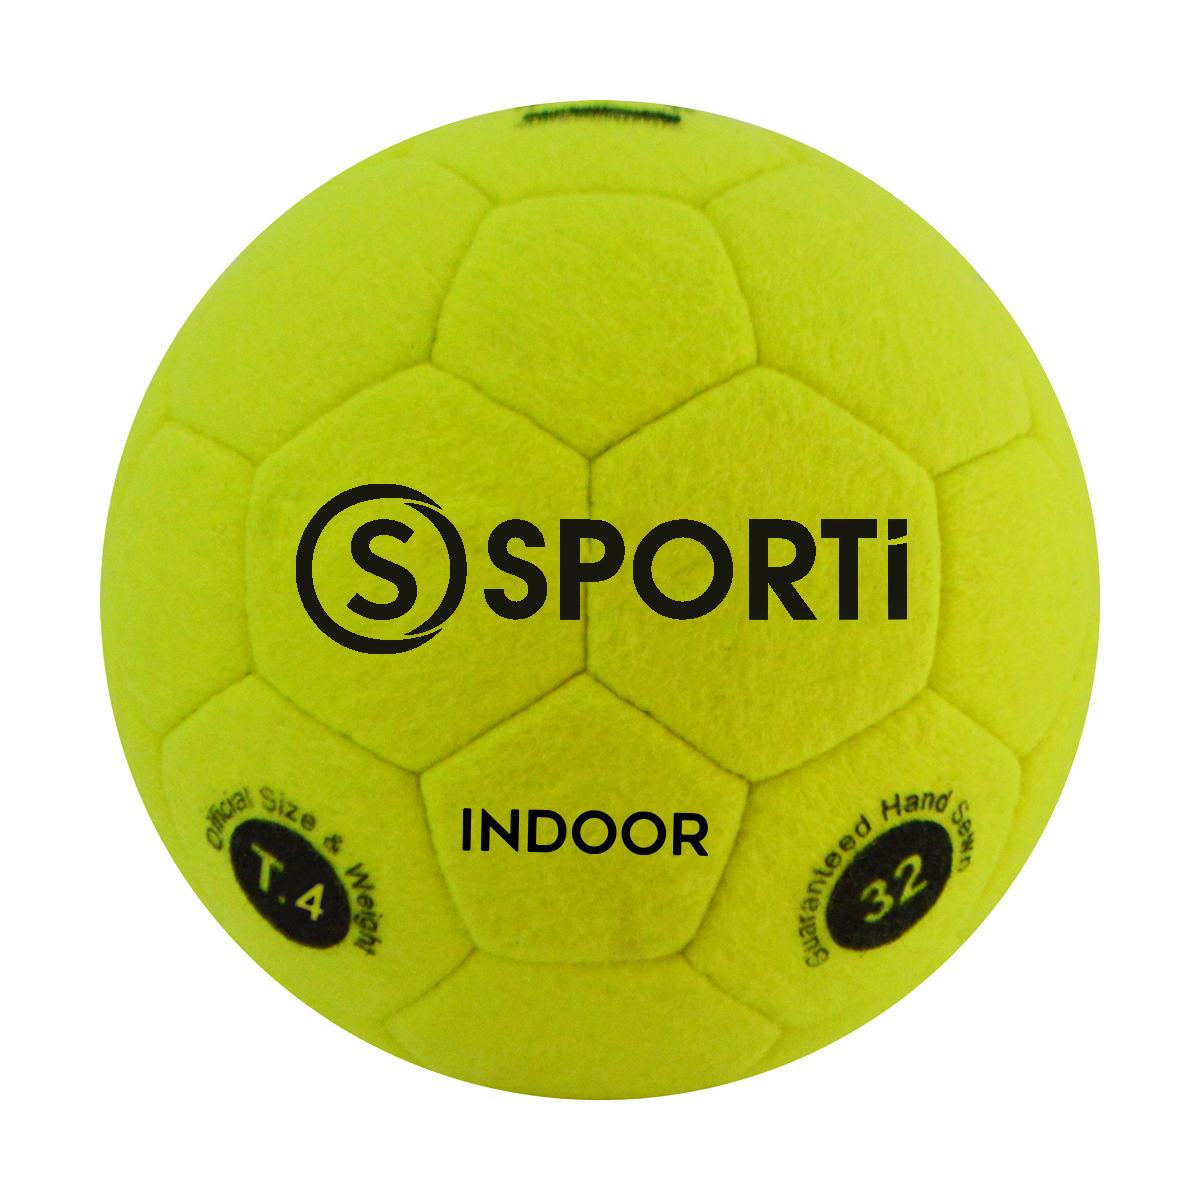 067289_SPORTI_ballon_de_football_indoor_jaune_sgequipement_sg_equipement_taille_4